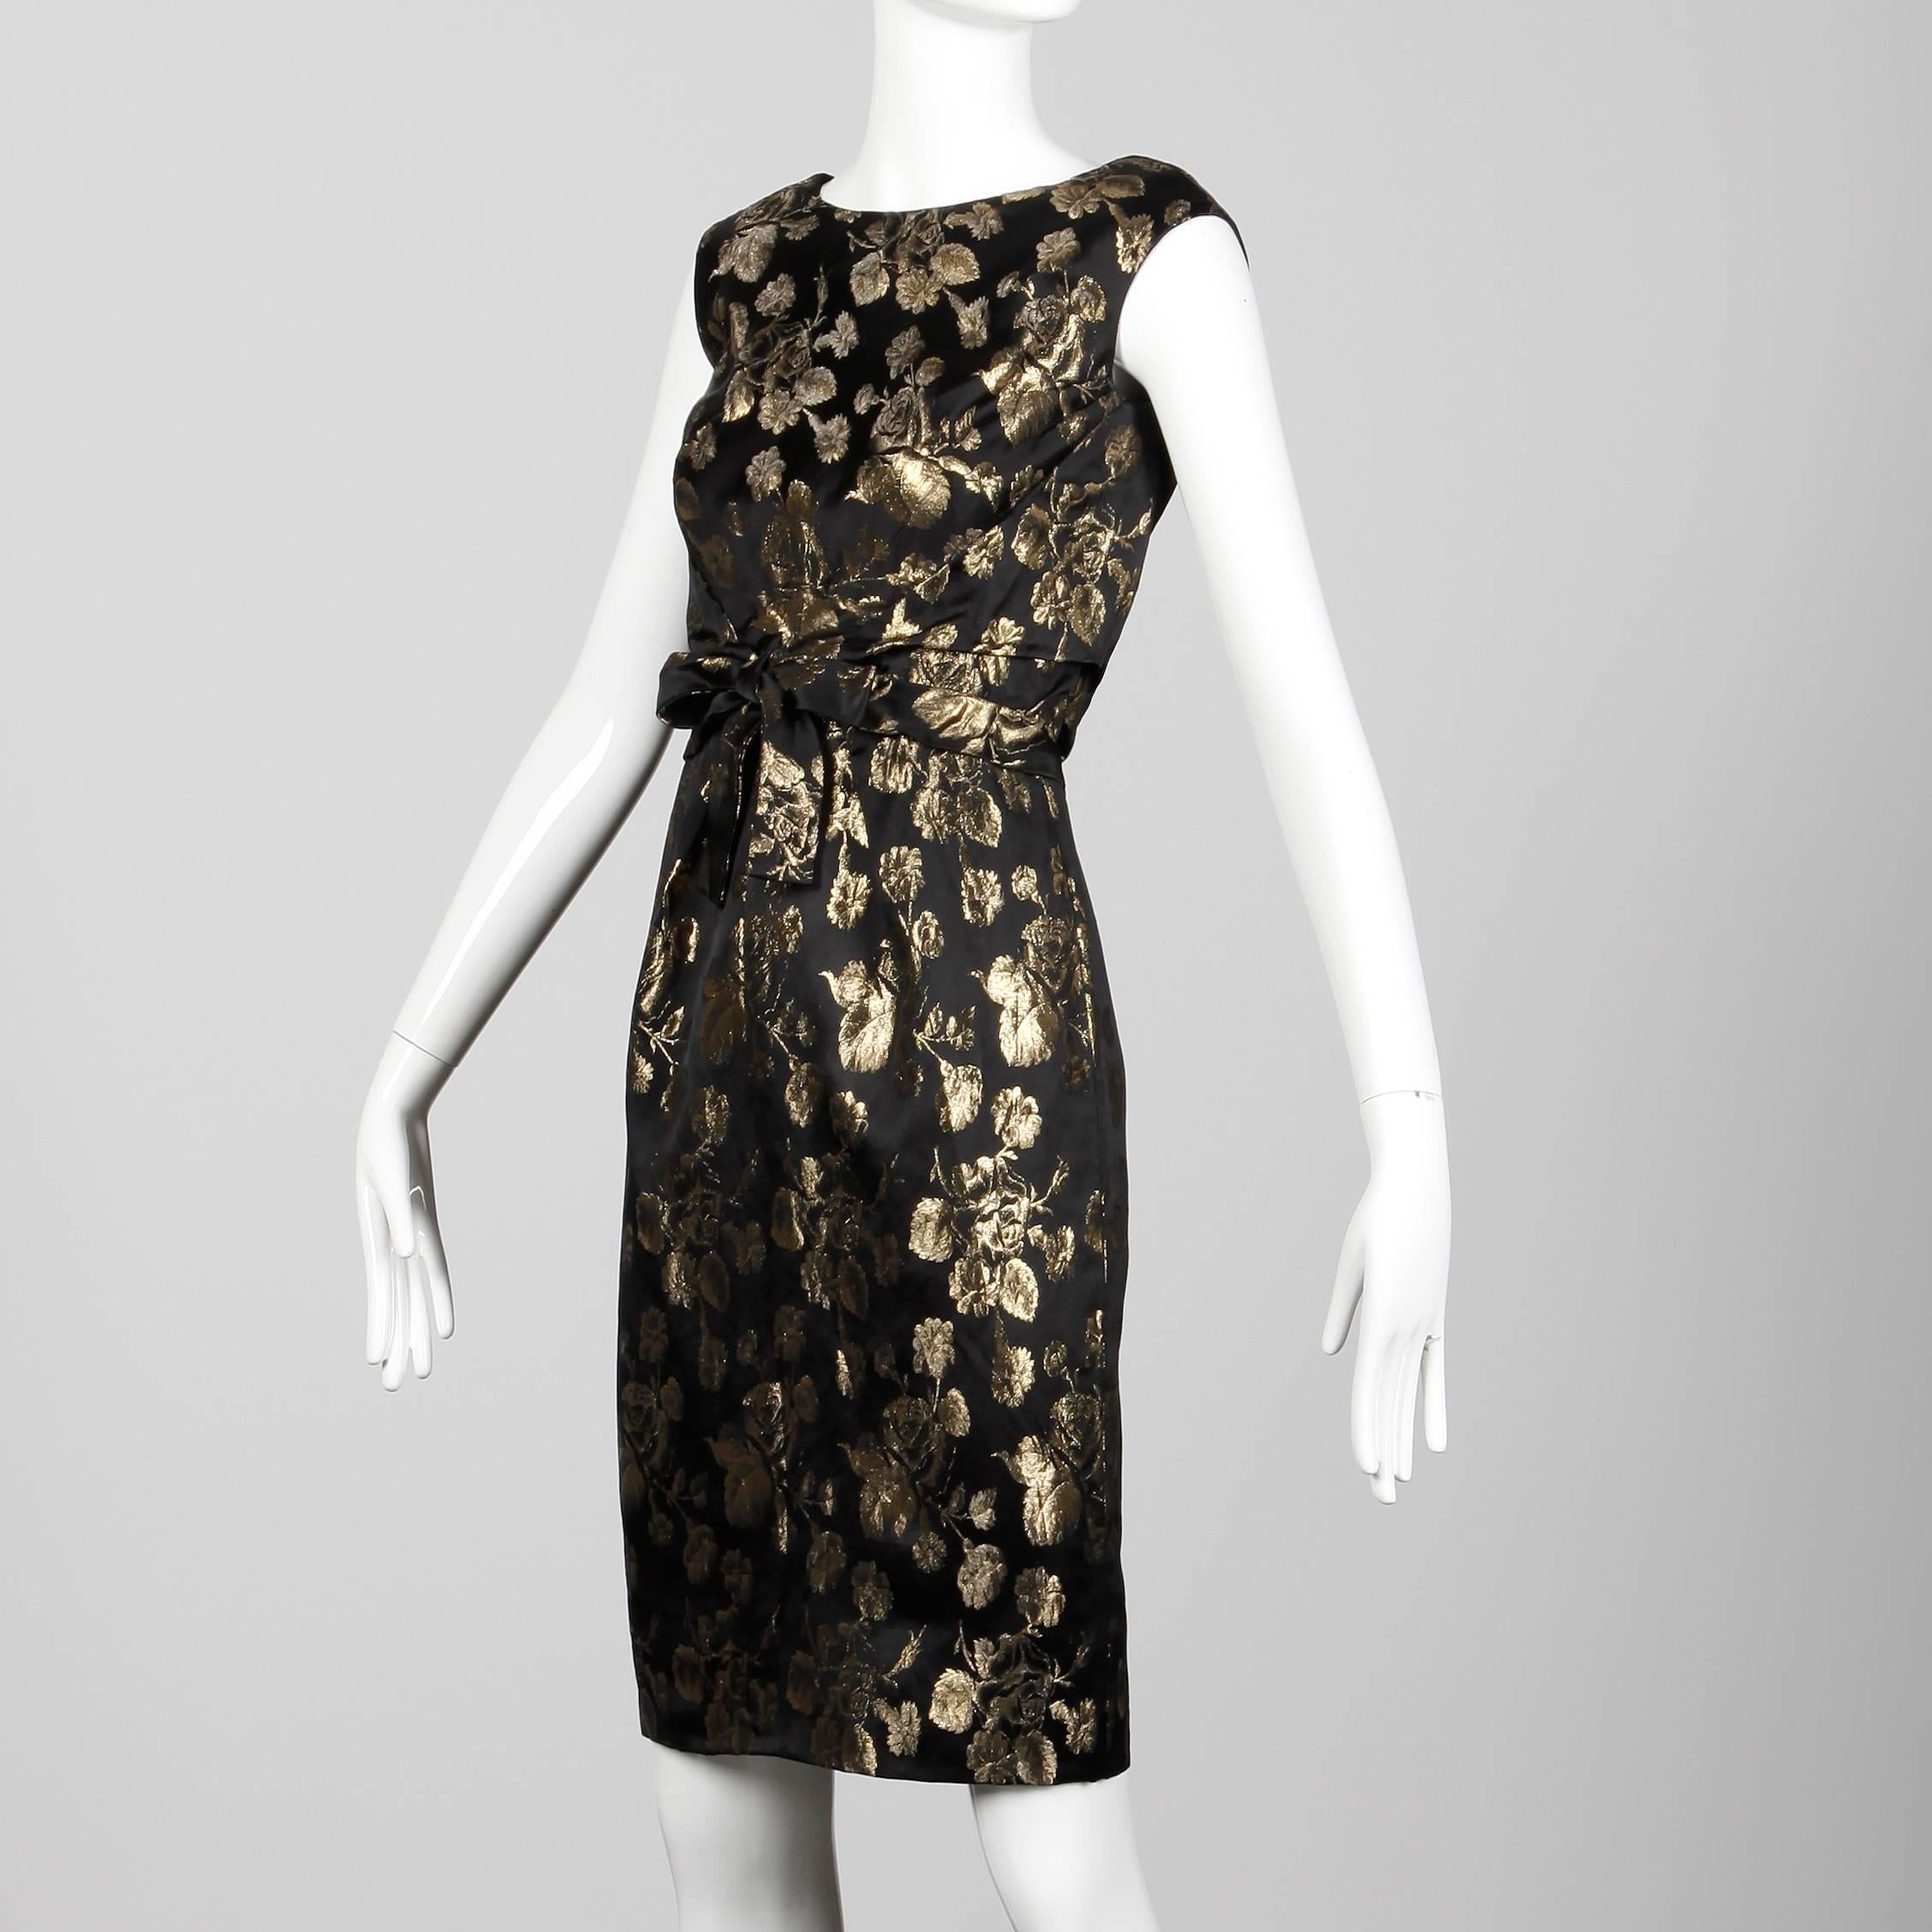 metallic gold and black dress